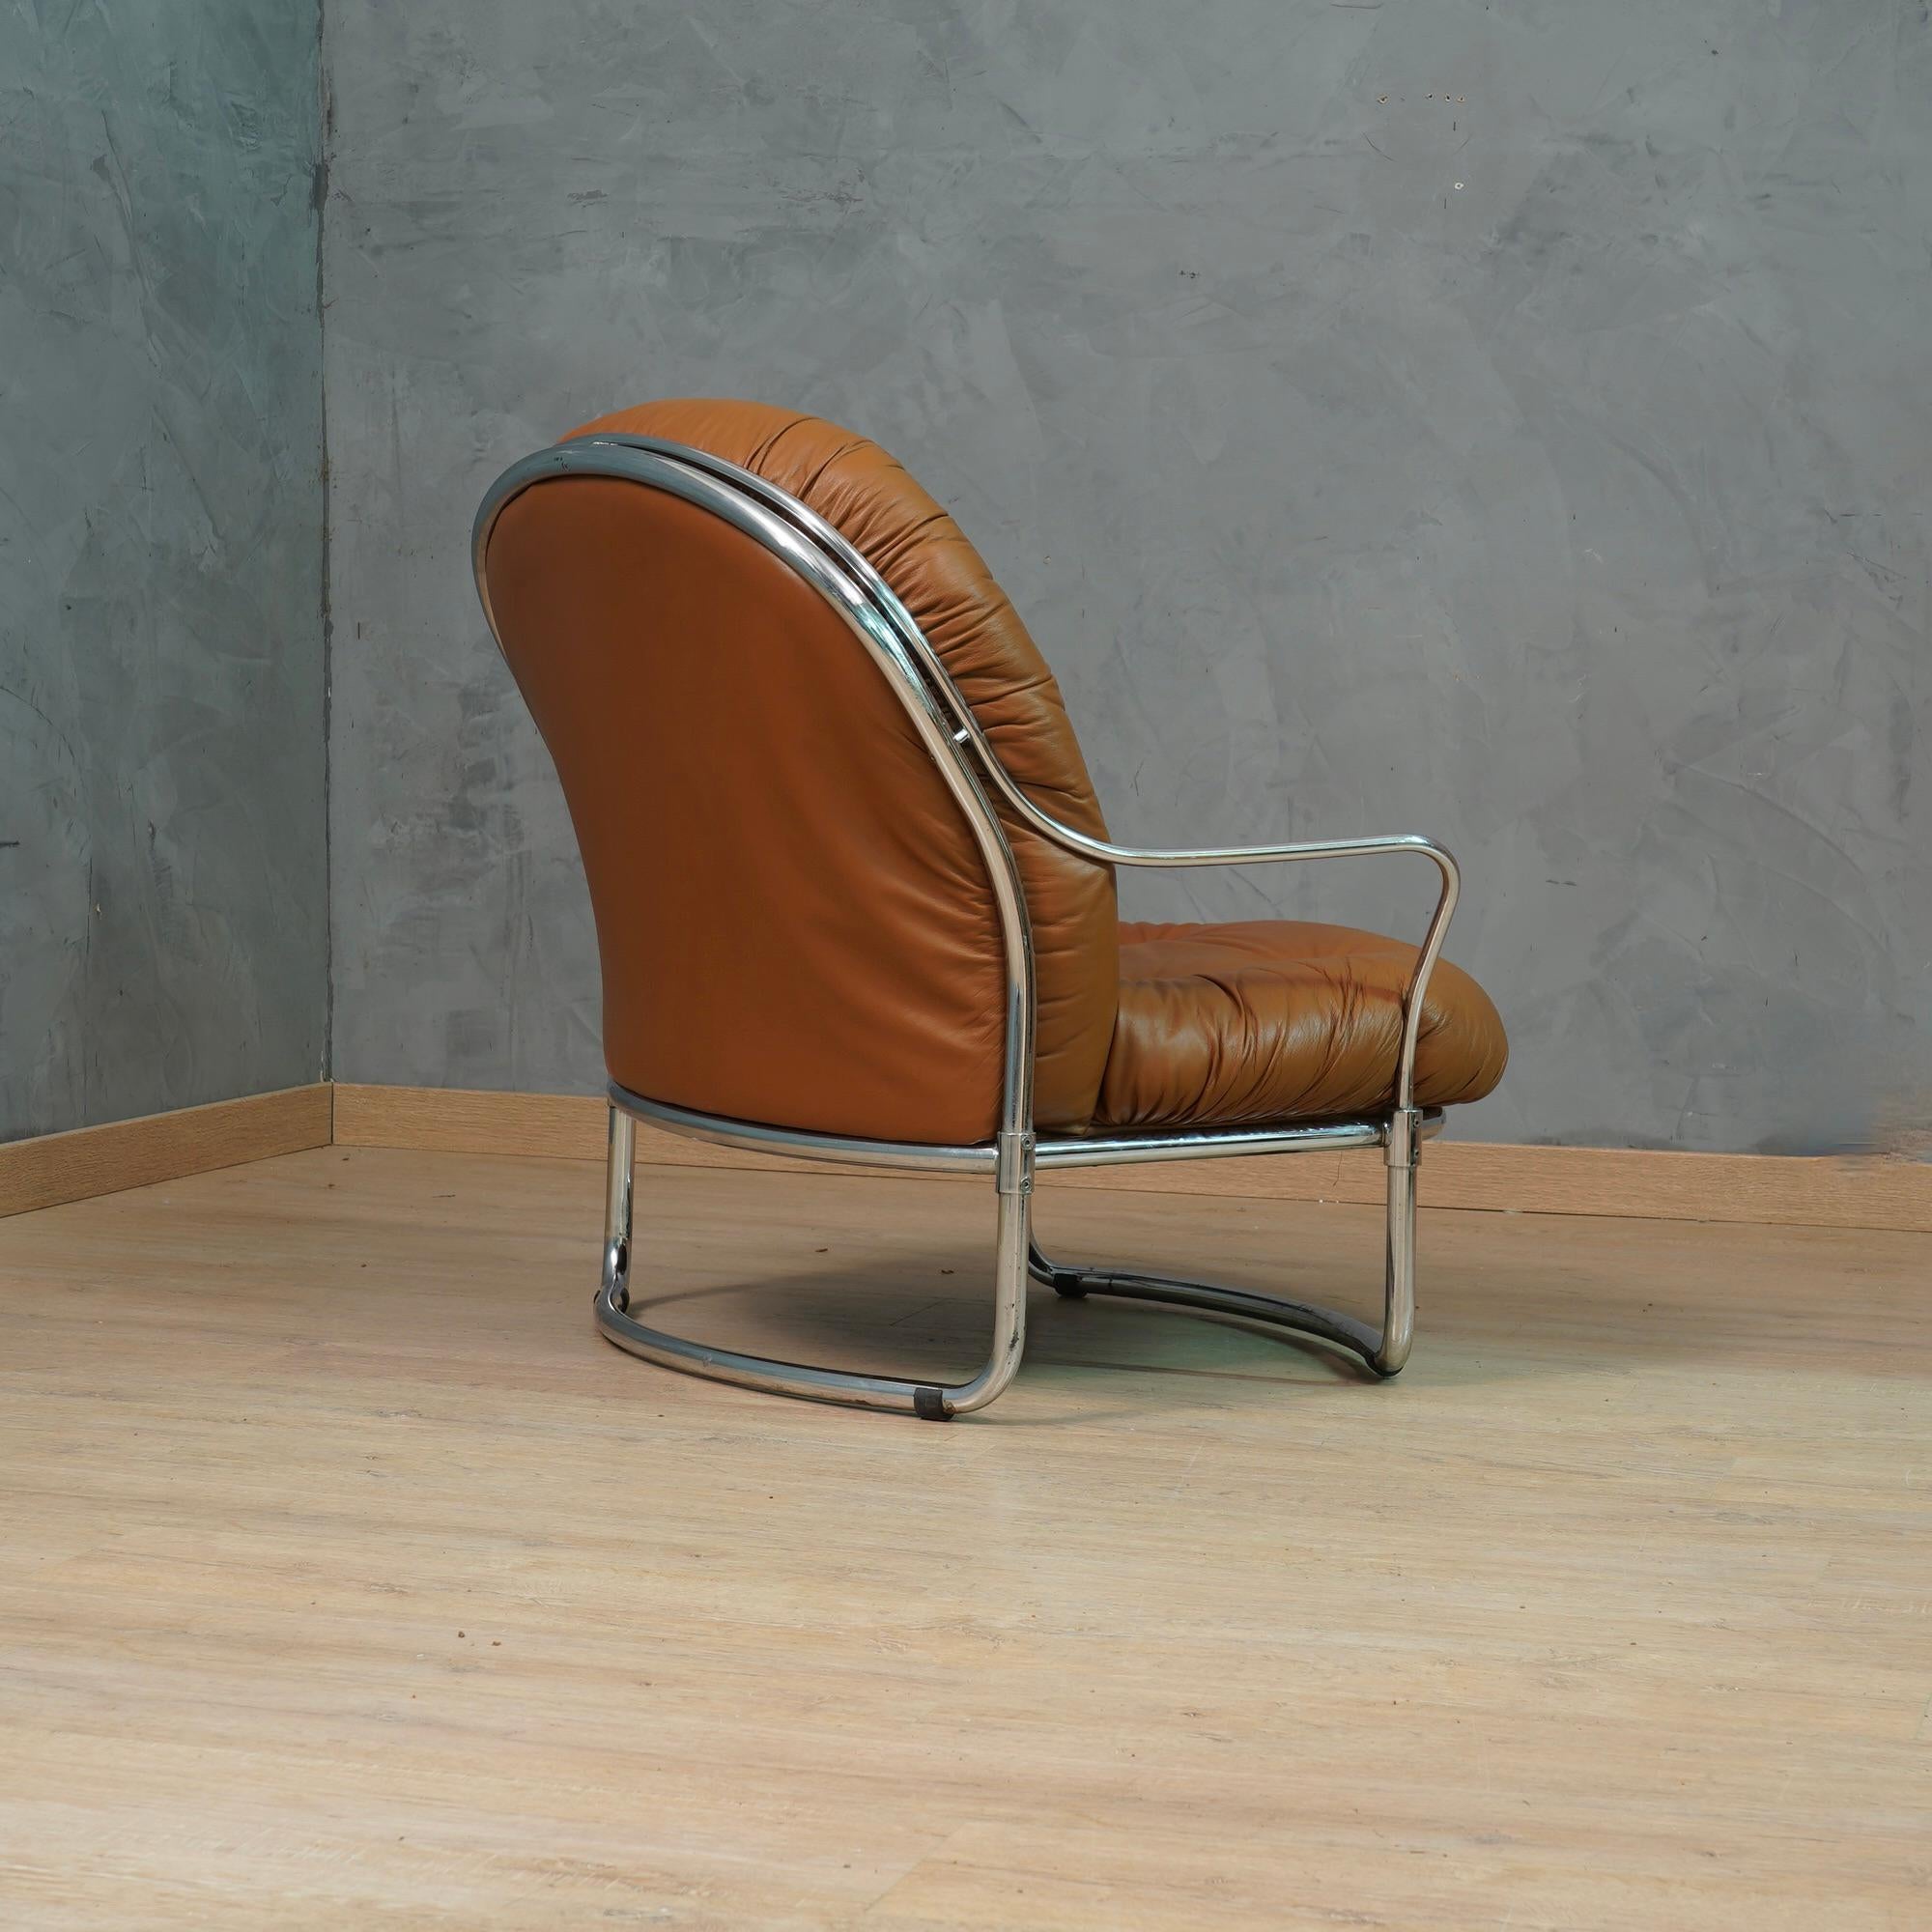 Italian Carlo De Carli for Cinova Mod. 915 Chrome and Brown Leather Arm Chair, 1969 For Sale